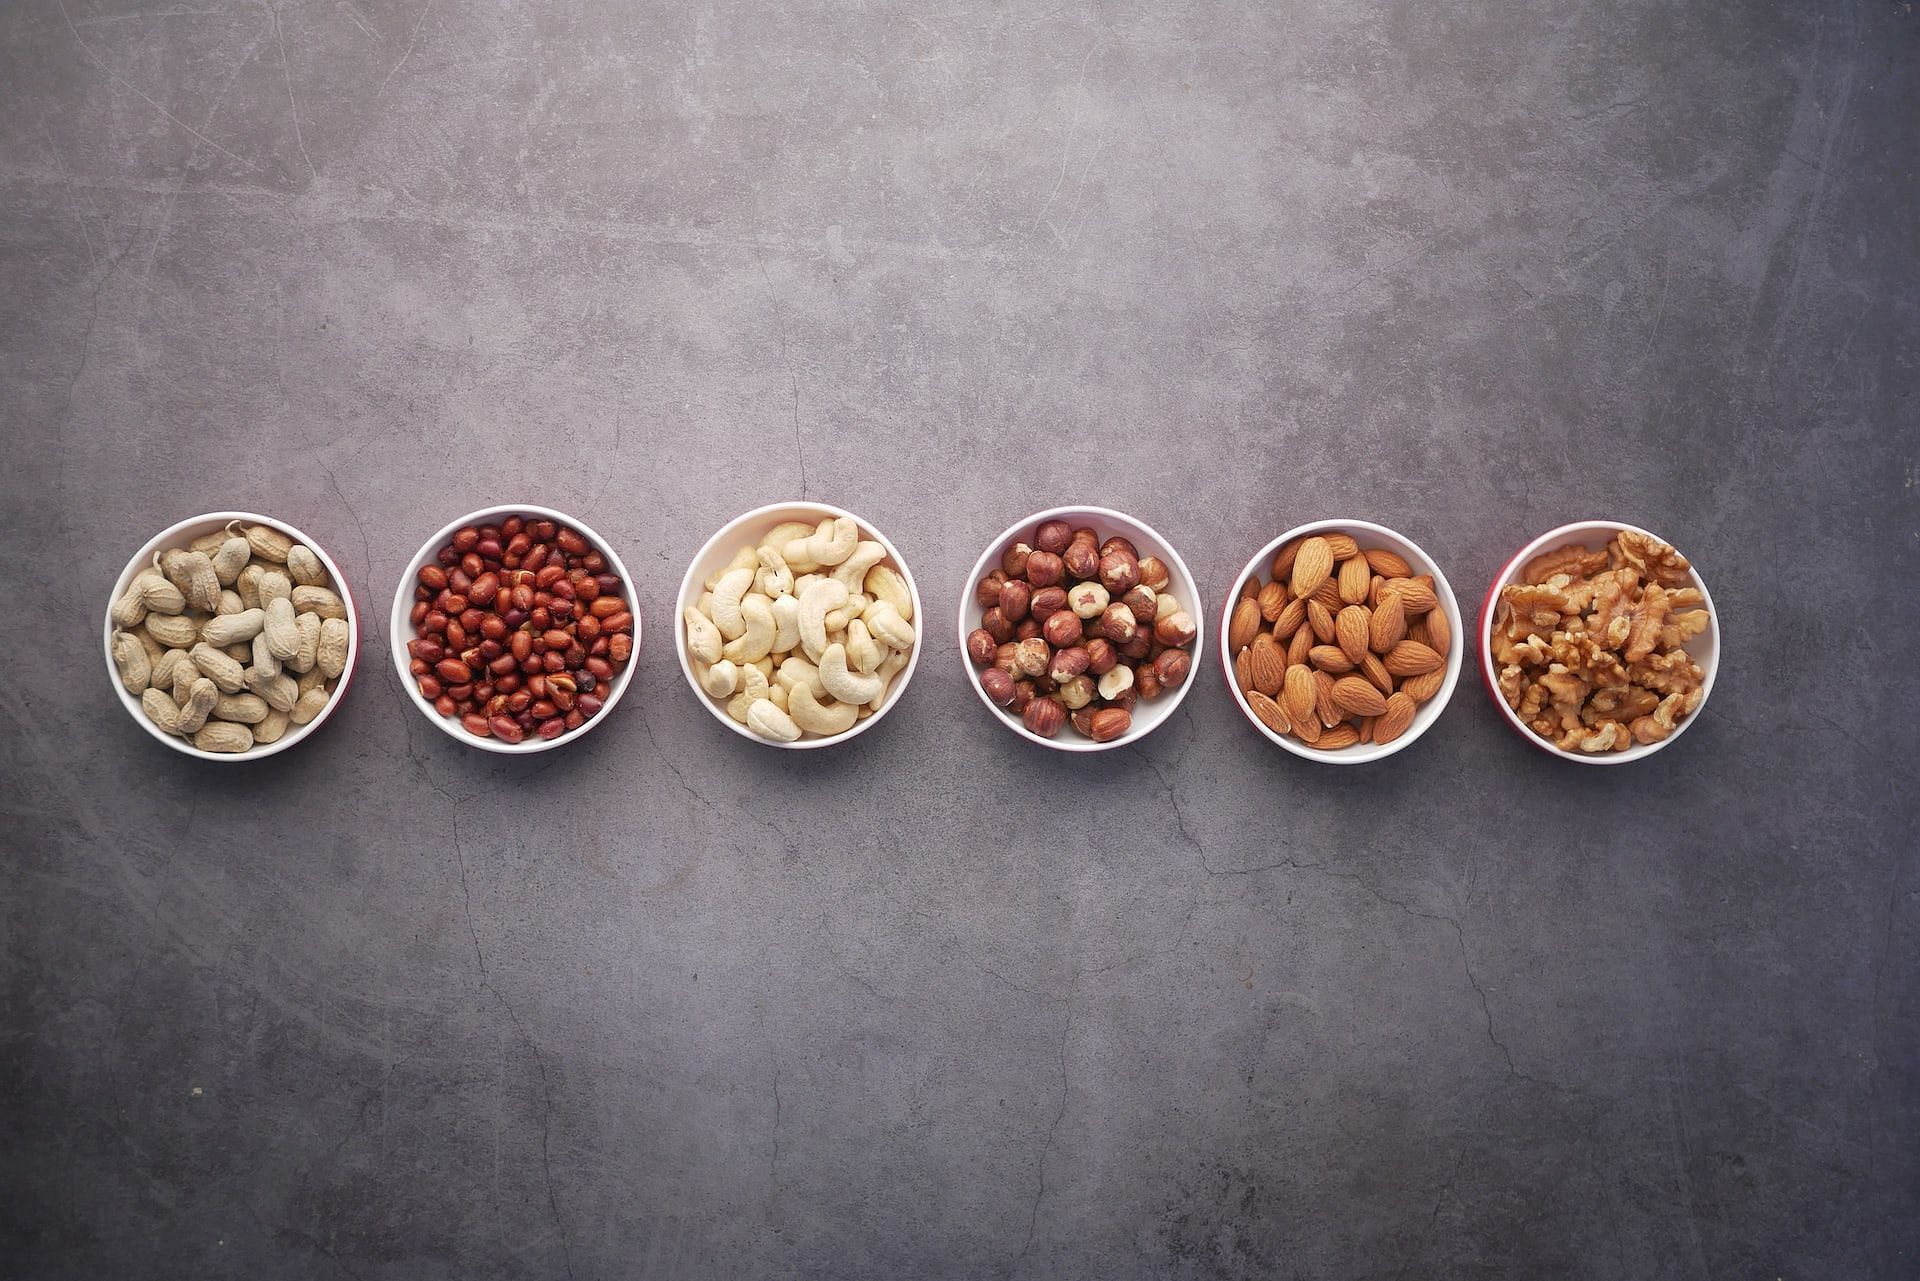 Types of nuts (Photo via Unsplash/Towfiqu barbhuiya)